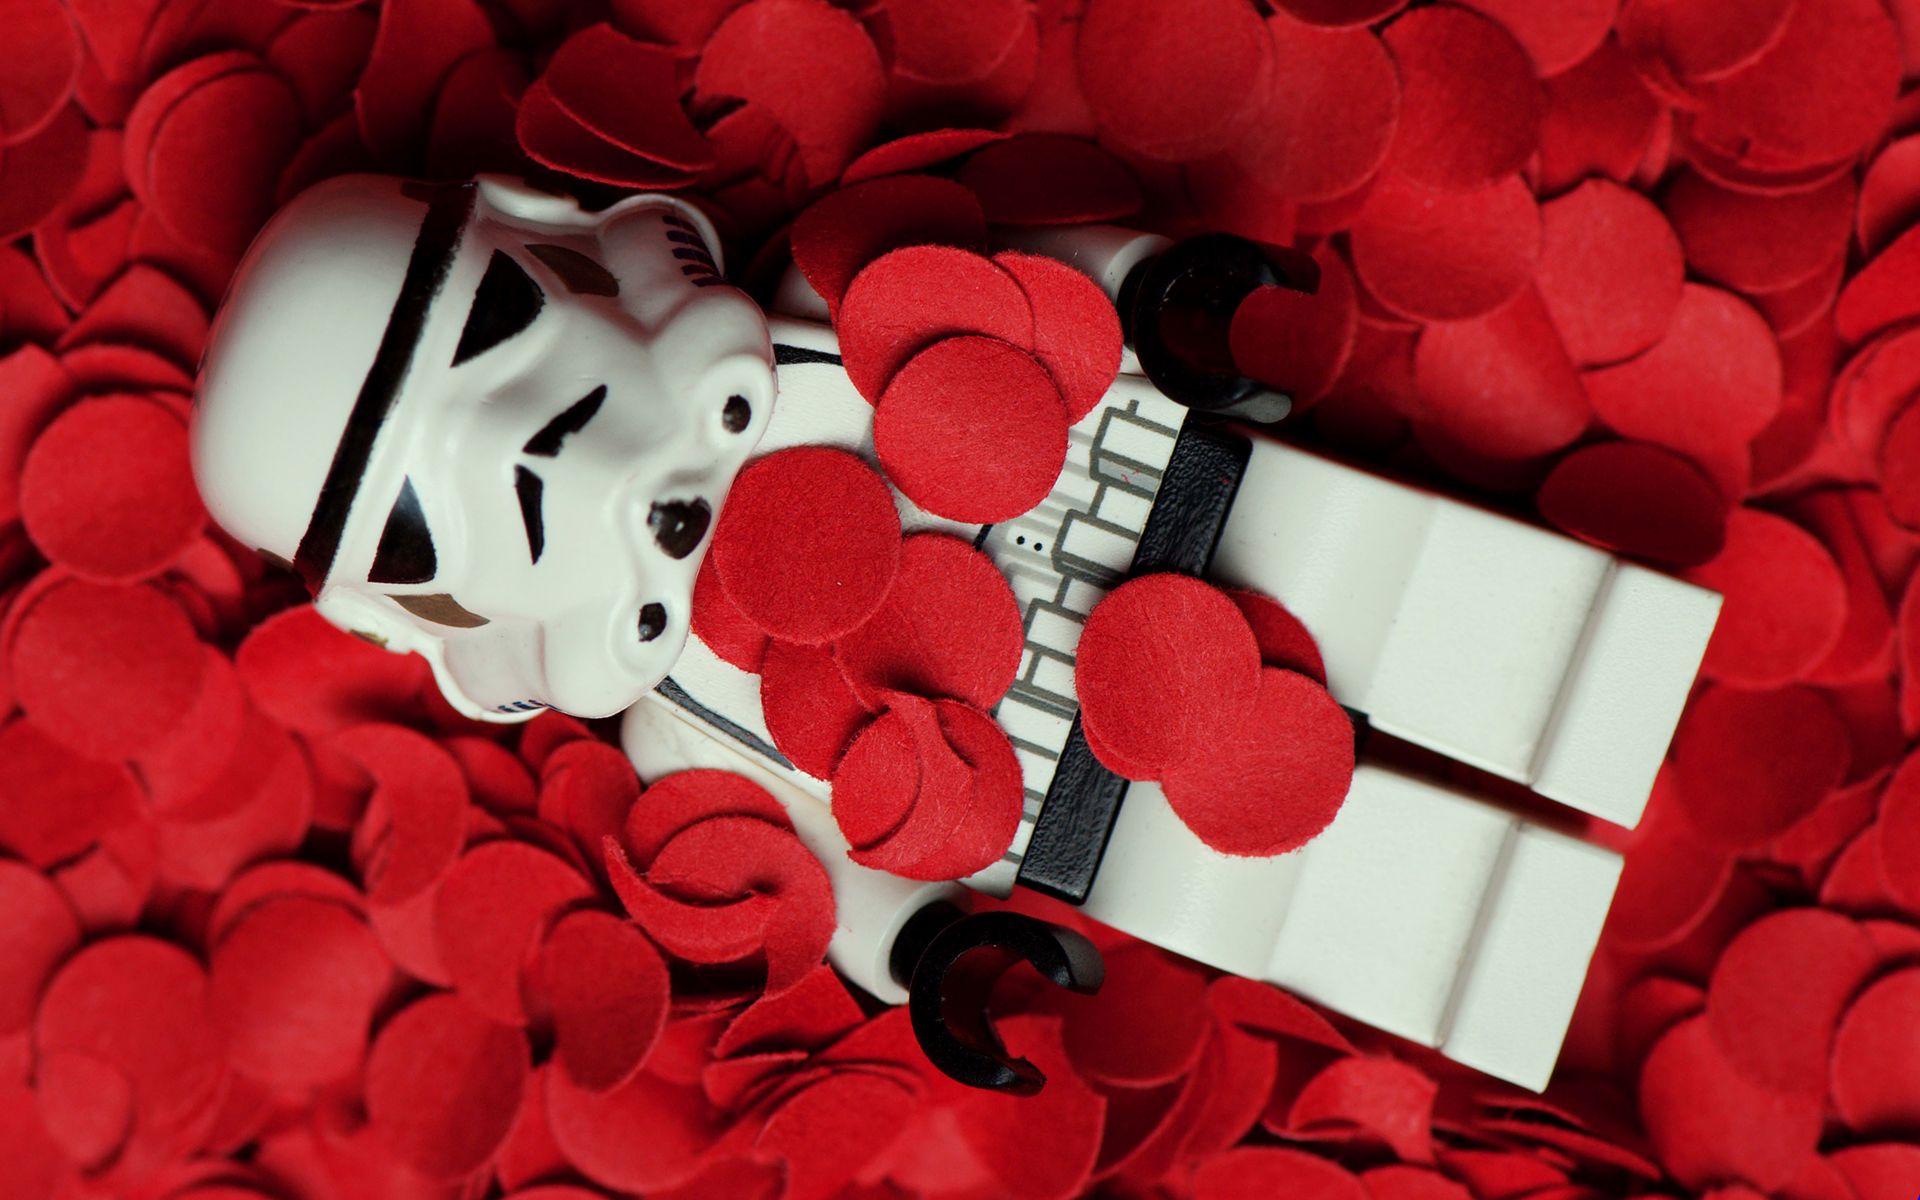 1920x1200 Star Wars Flowers Stormtroopers American Beauty Legos Rose Petals